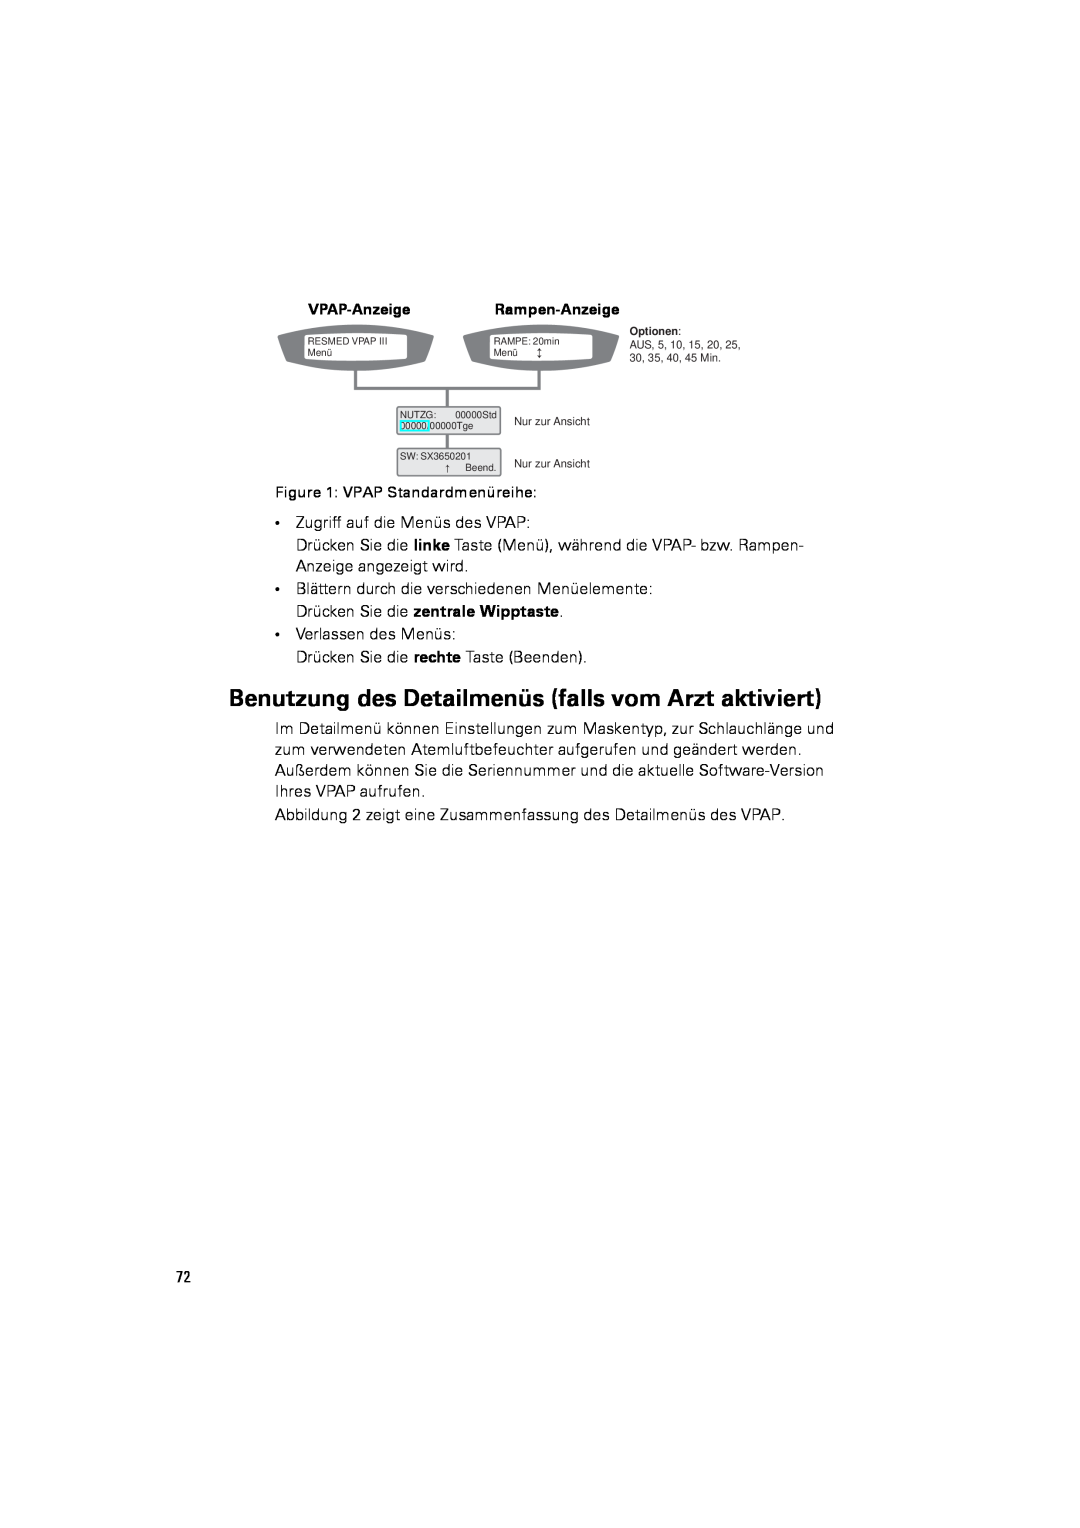 ResMed III & III ST user manual •Zugriff auf die Menüs des VPAP 